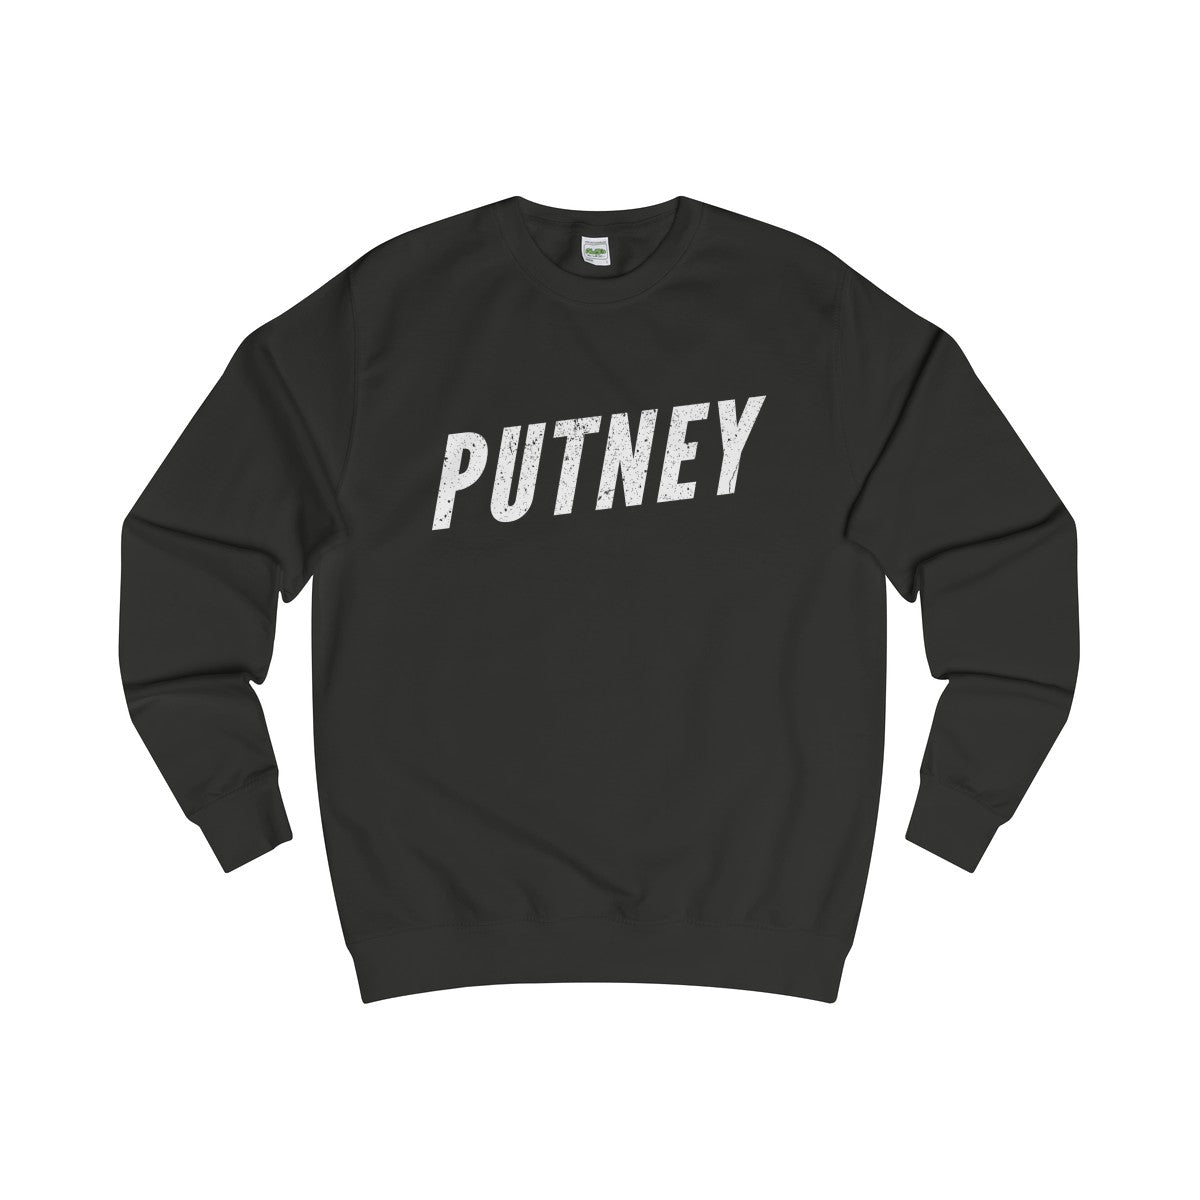 Putney Sweater